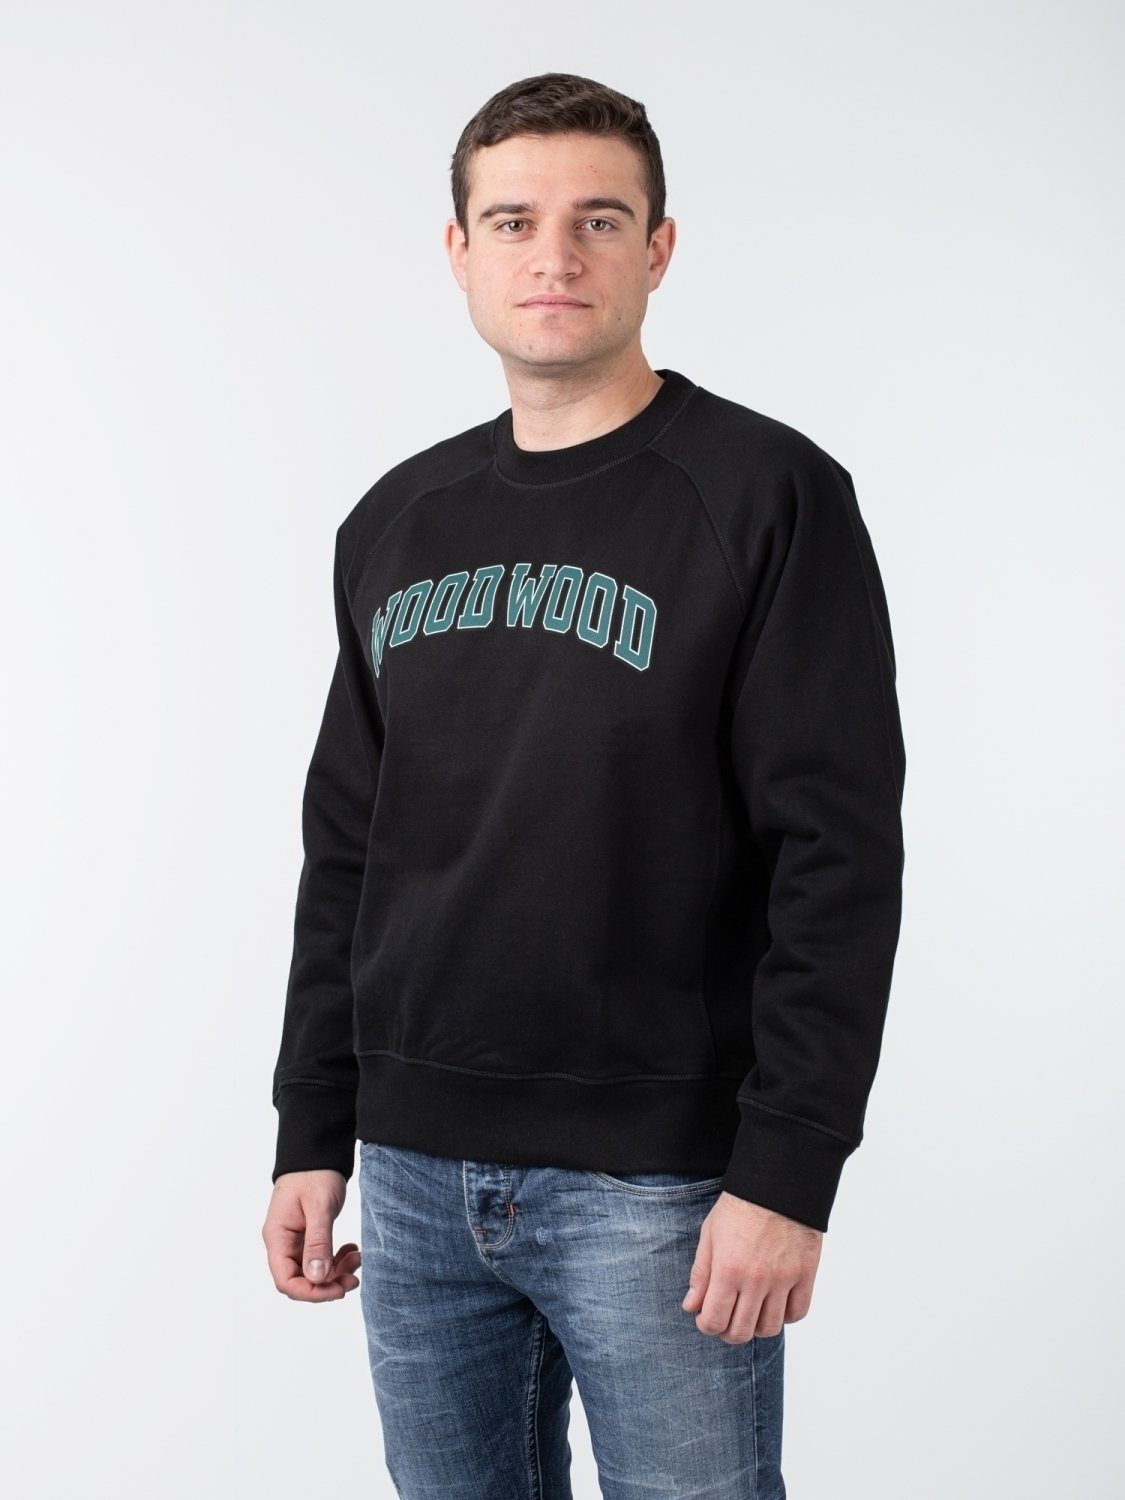 Sweatshirt WOOD Hester WOOD Wood Sweater Black Wood IVY